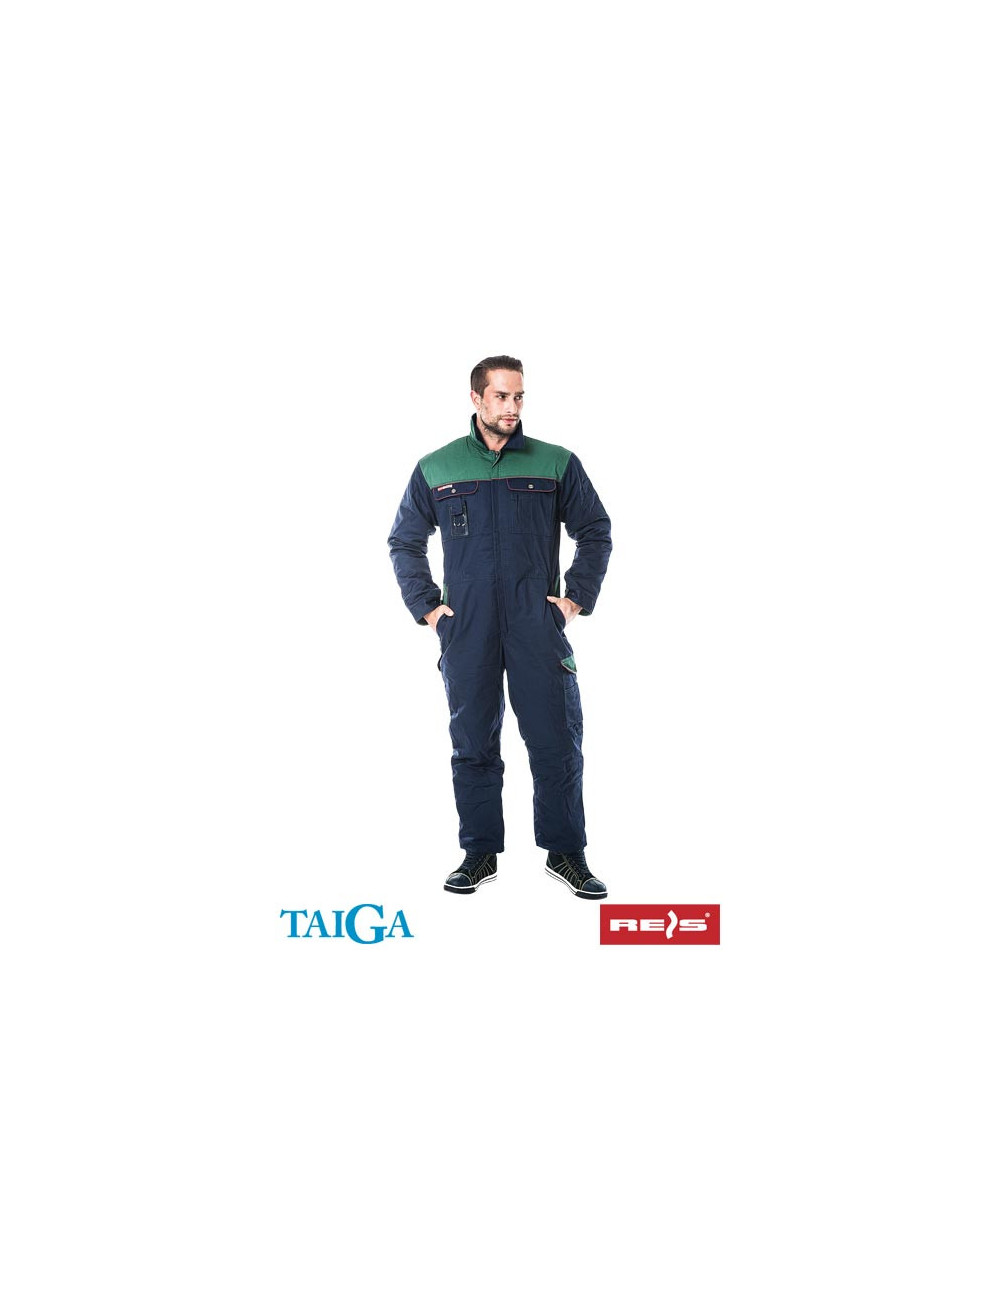 Protective suit insulated ktogz gz navy-green Reis